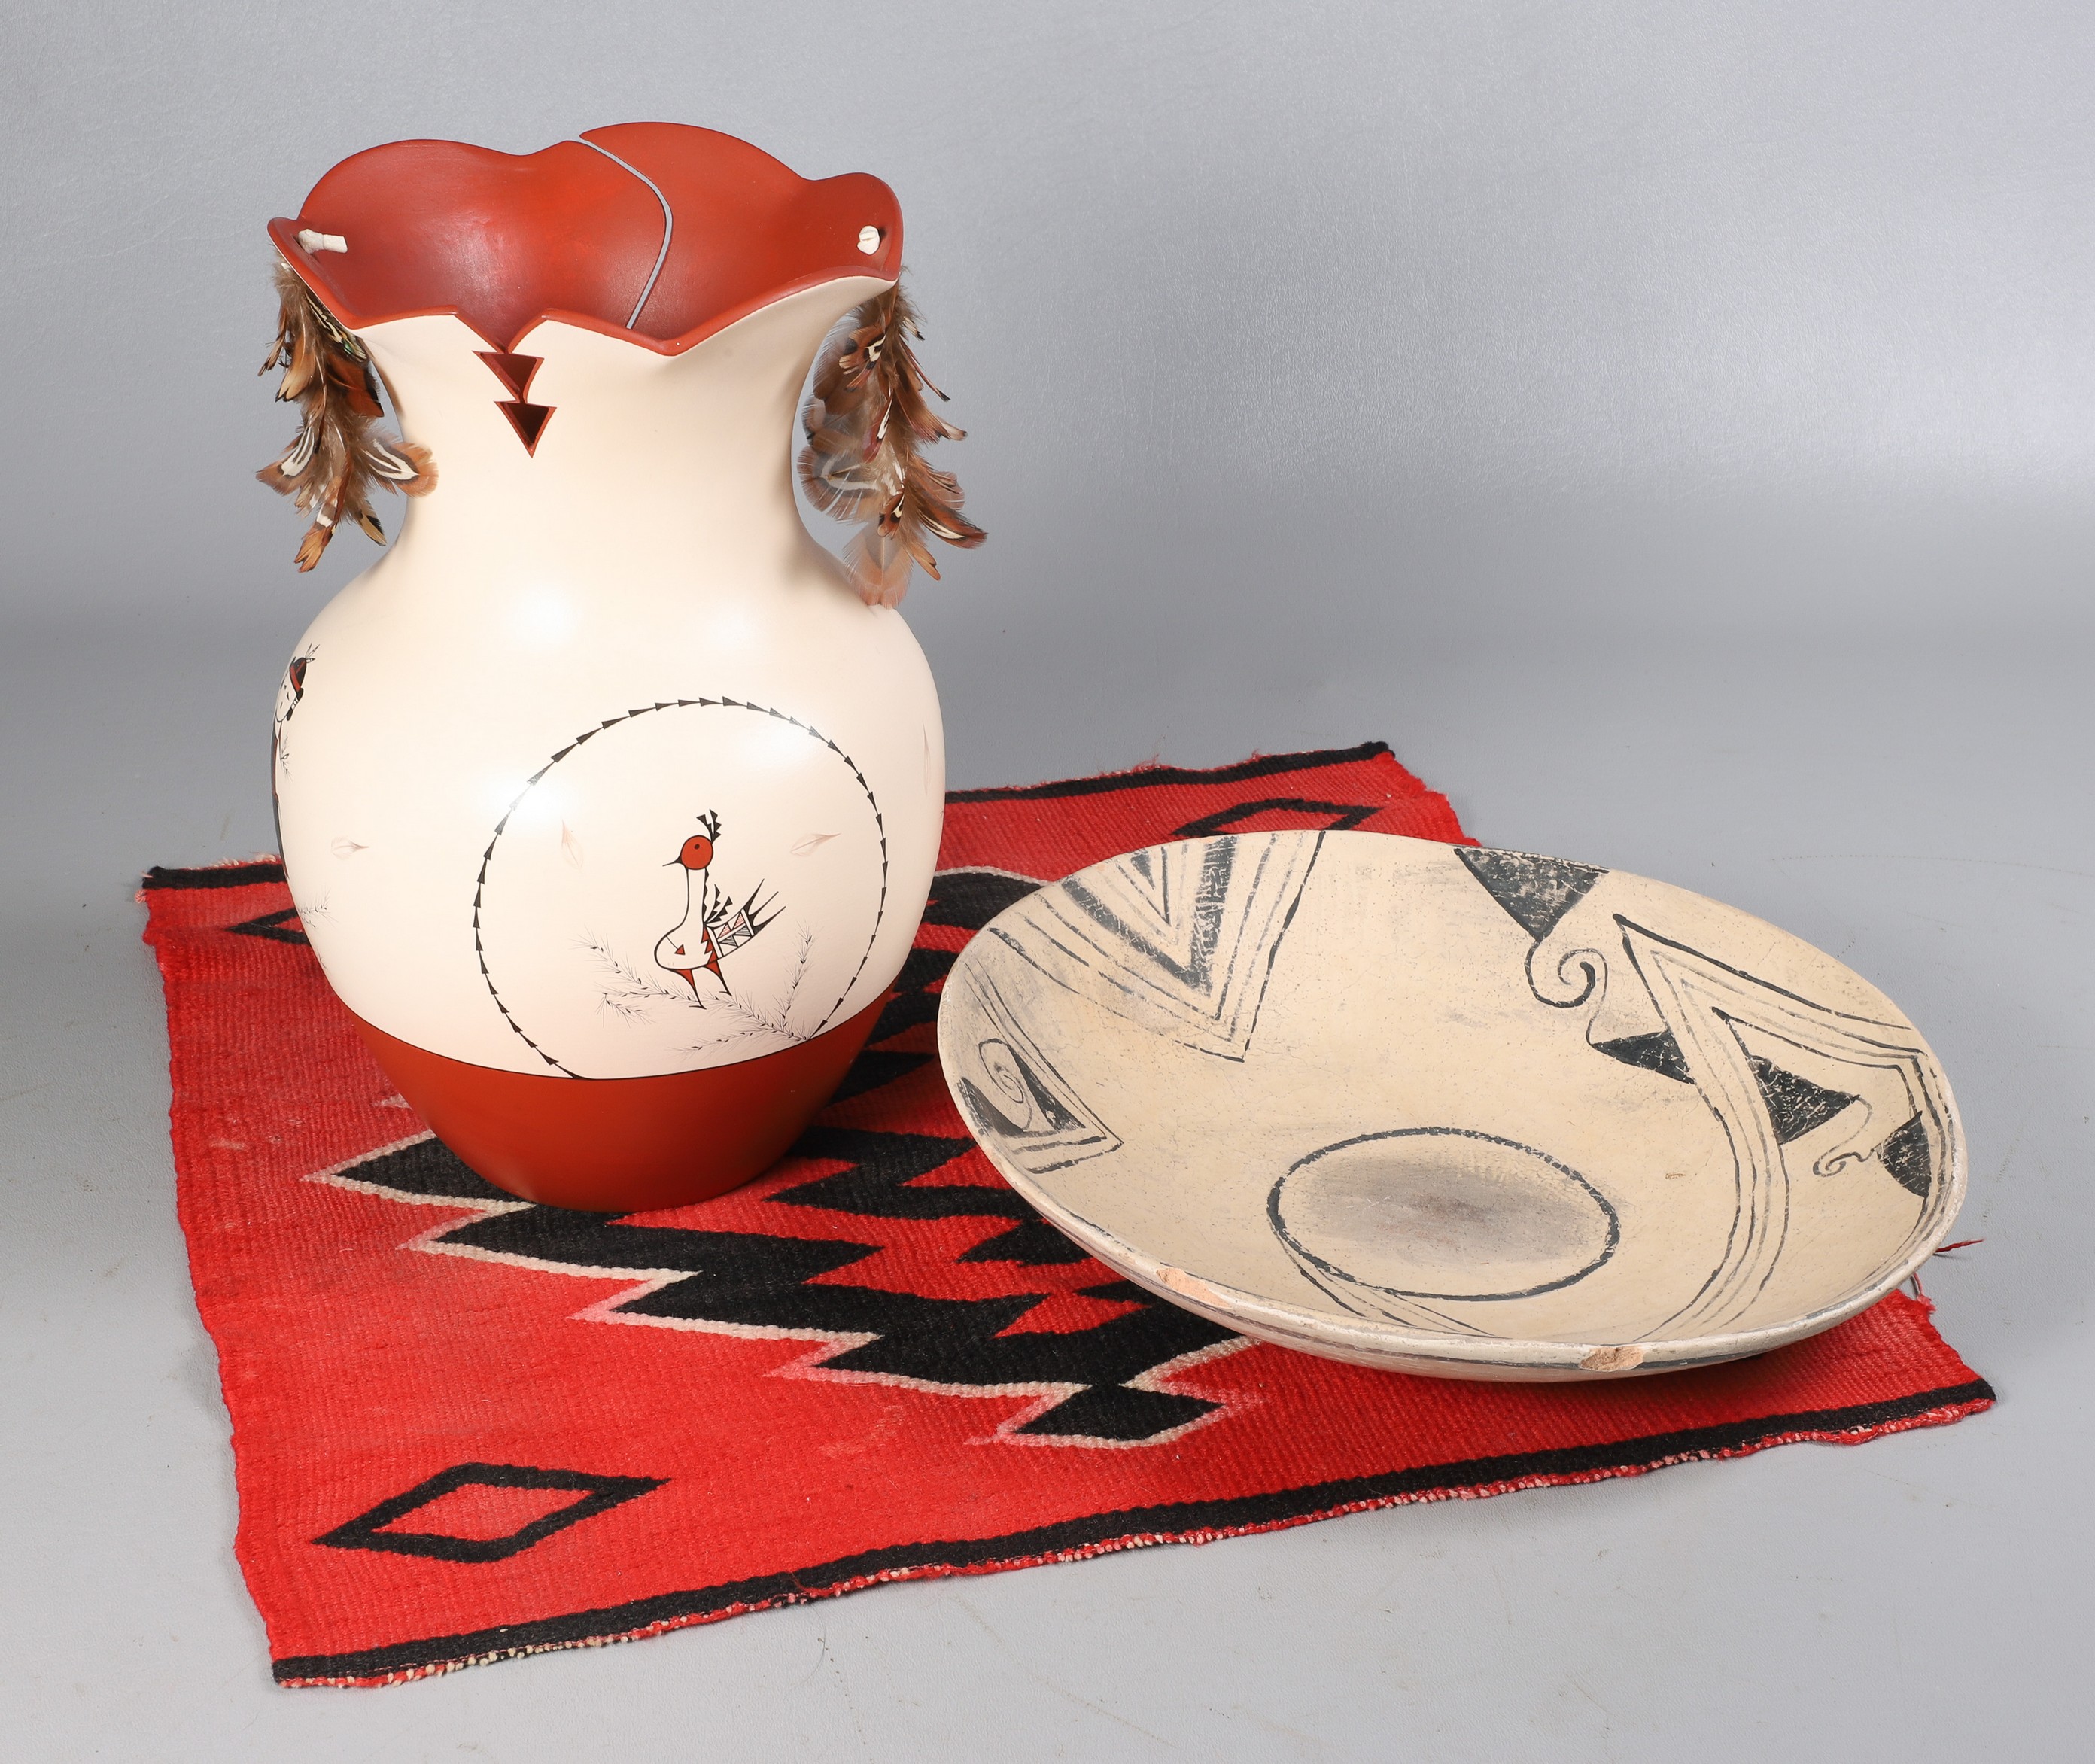 (3) Native American items, c/o